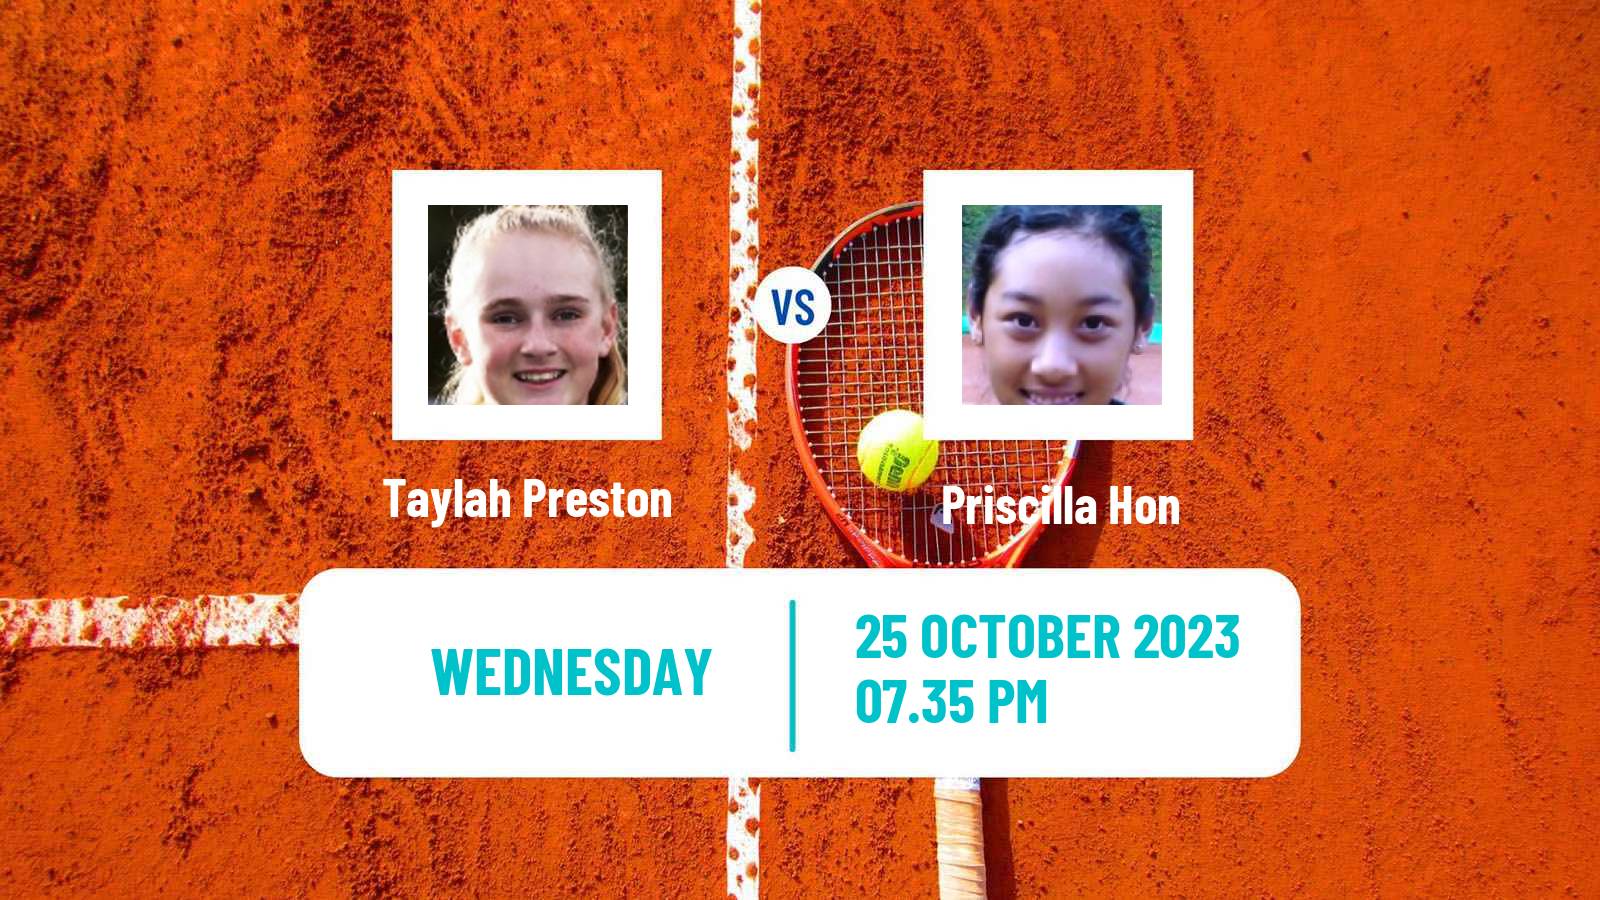 Tennis ITF W60 Playford Women Taylah Preston - Priscilla Hon